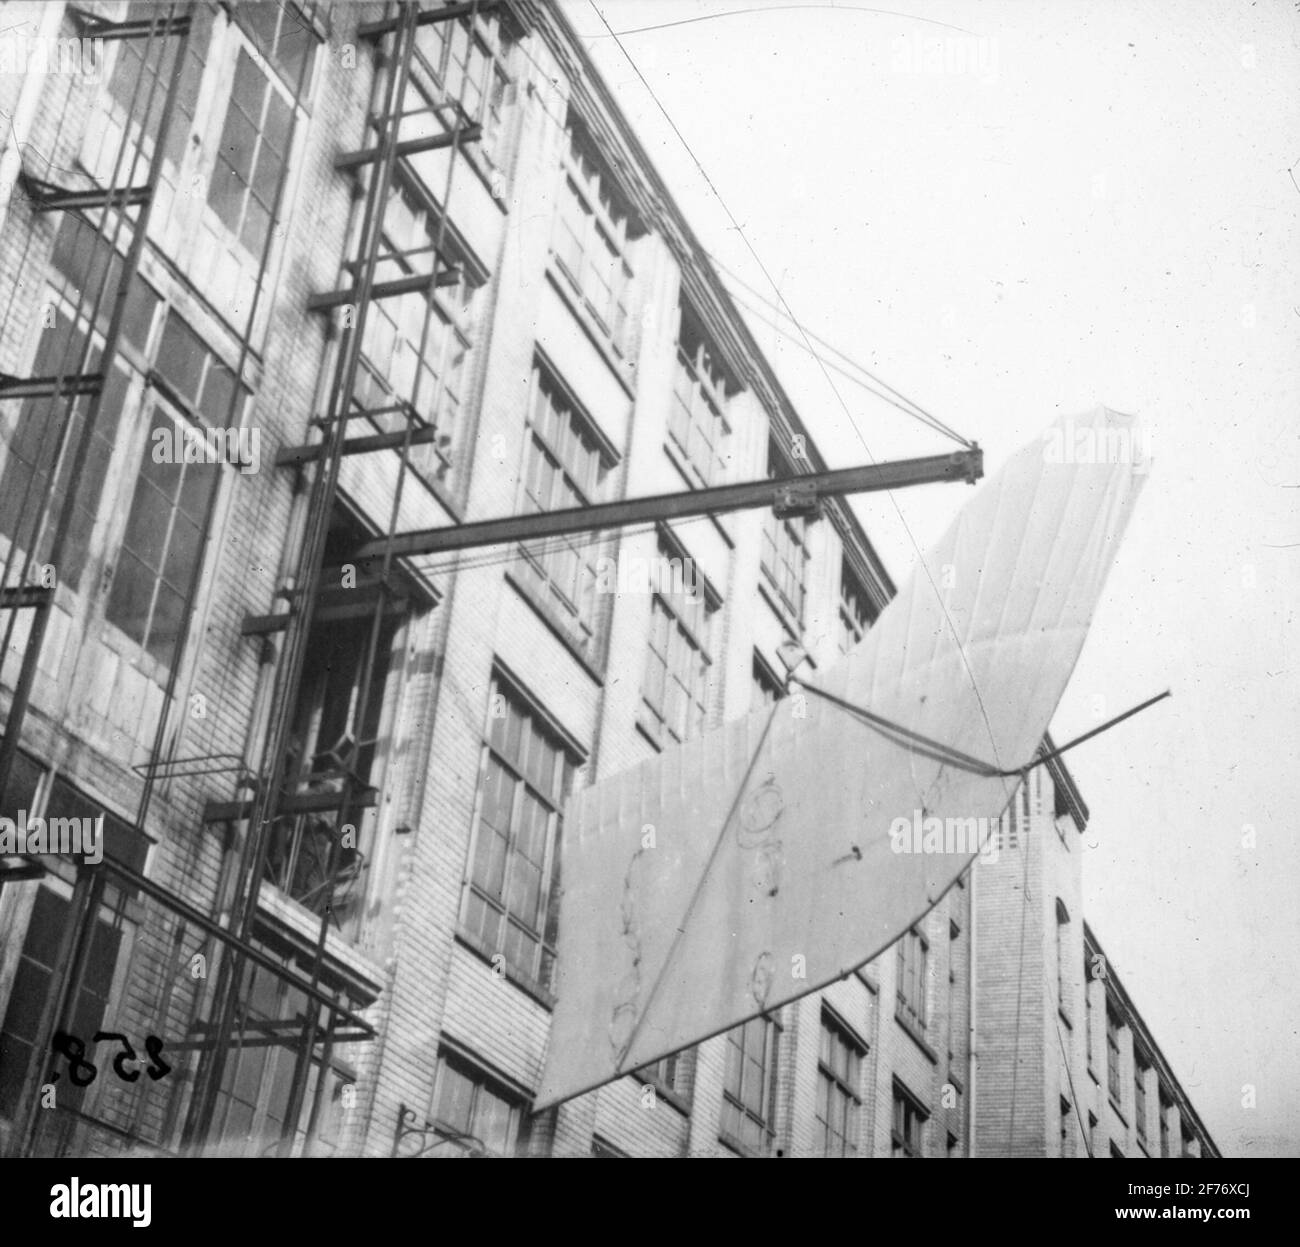 Skiopticone image with motifs of aircraft vinge. Stock Photo